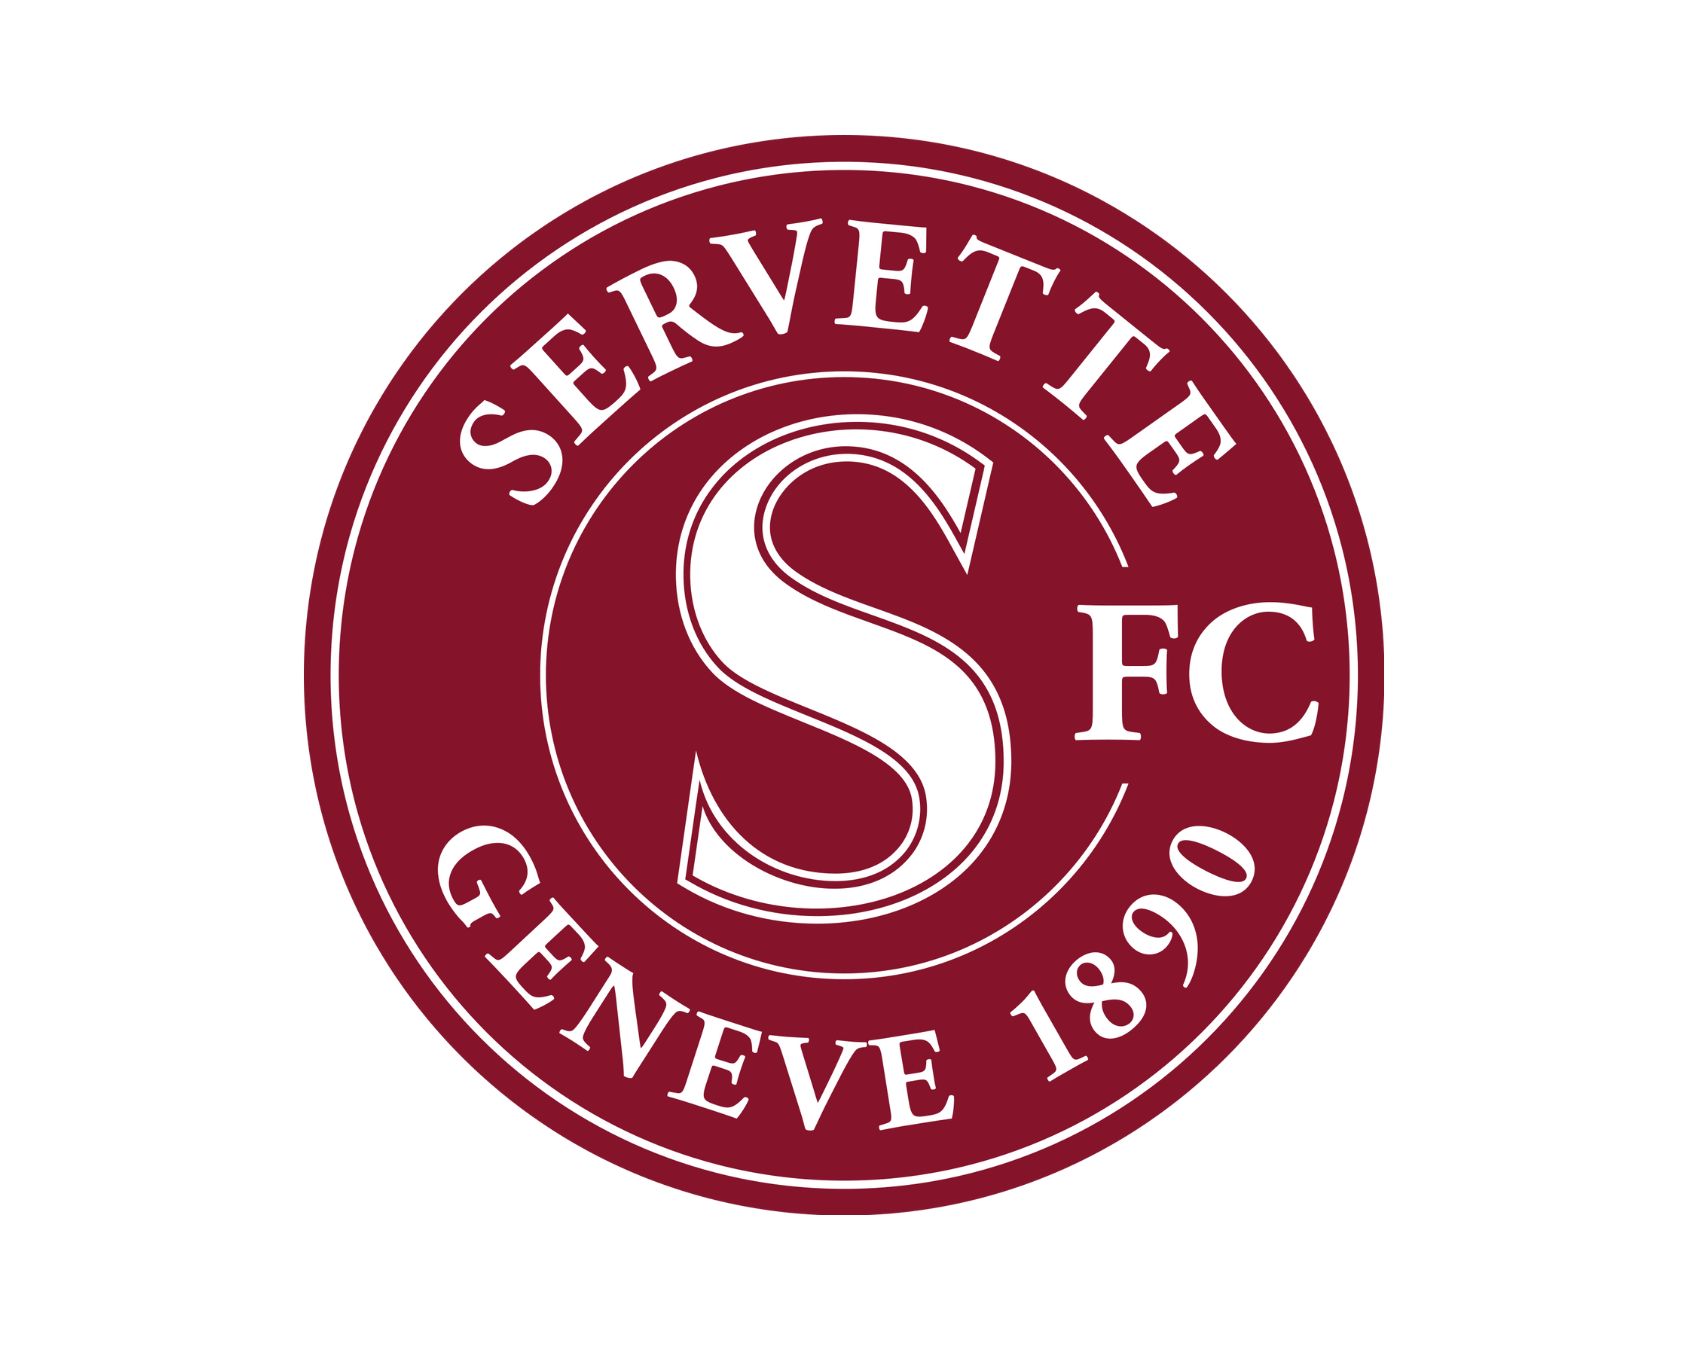 servette-fc-19-football-club-facts